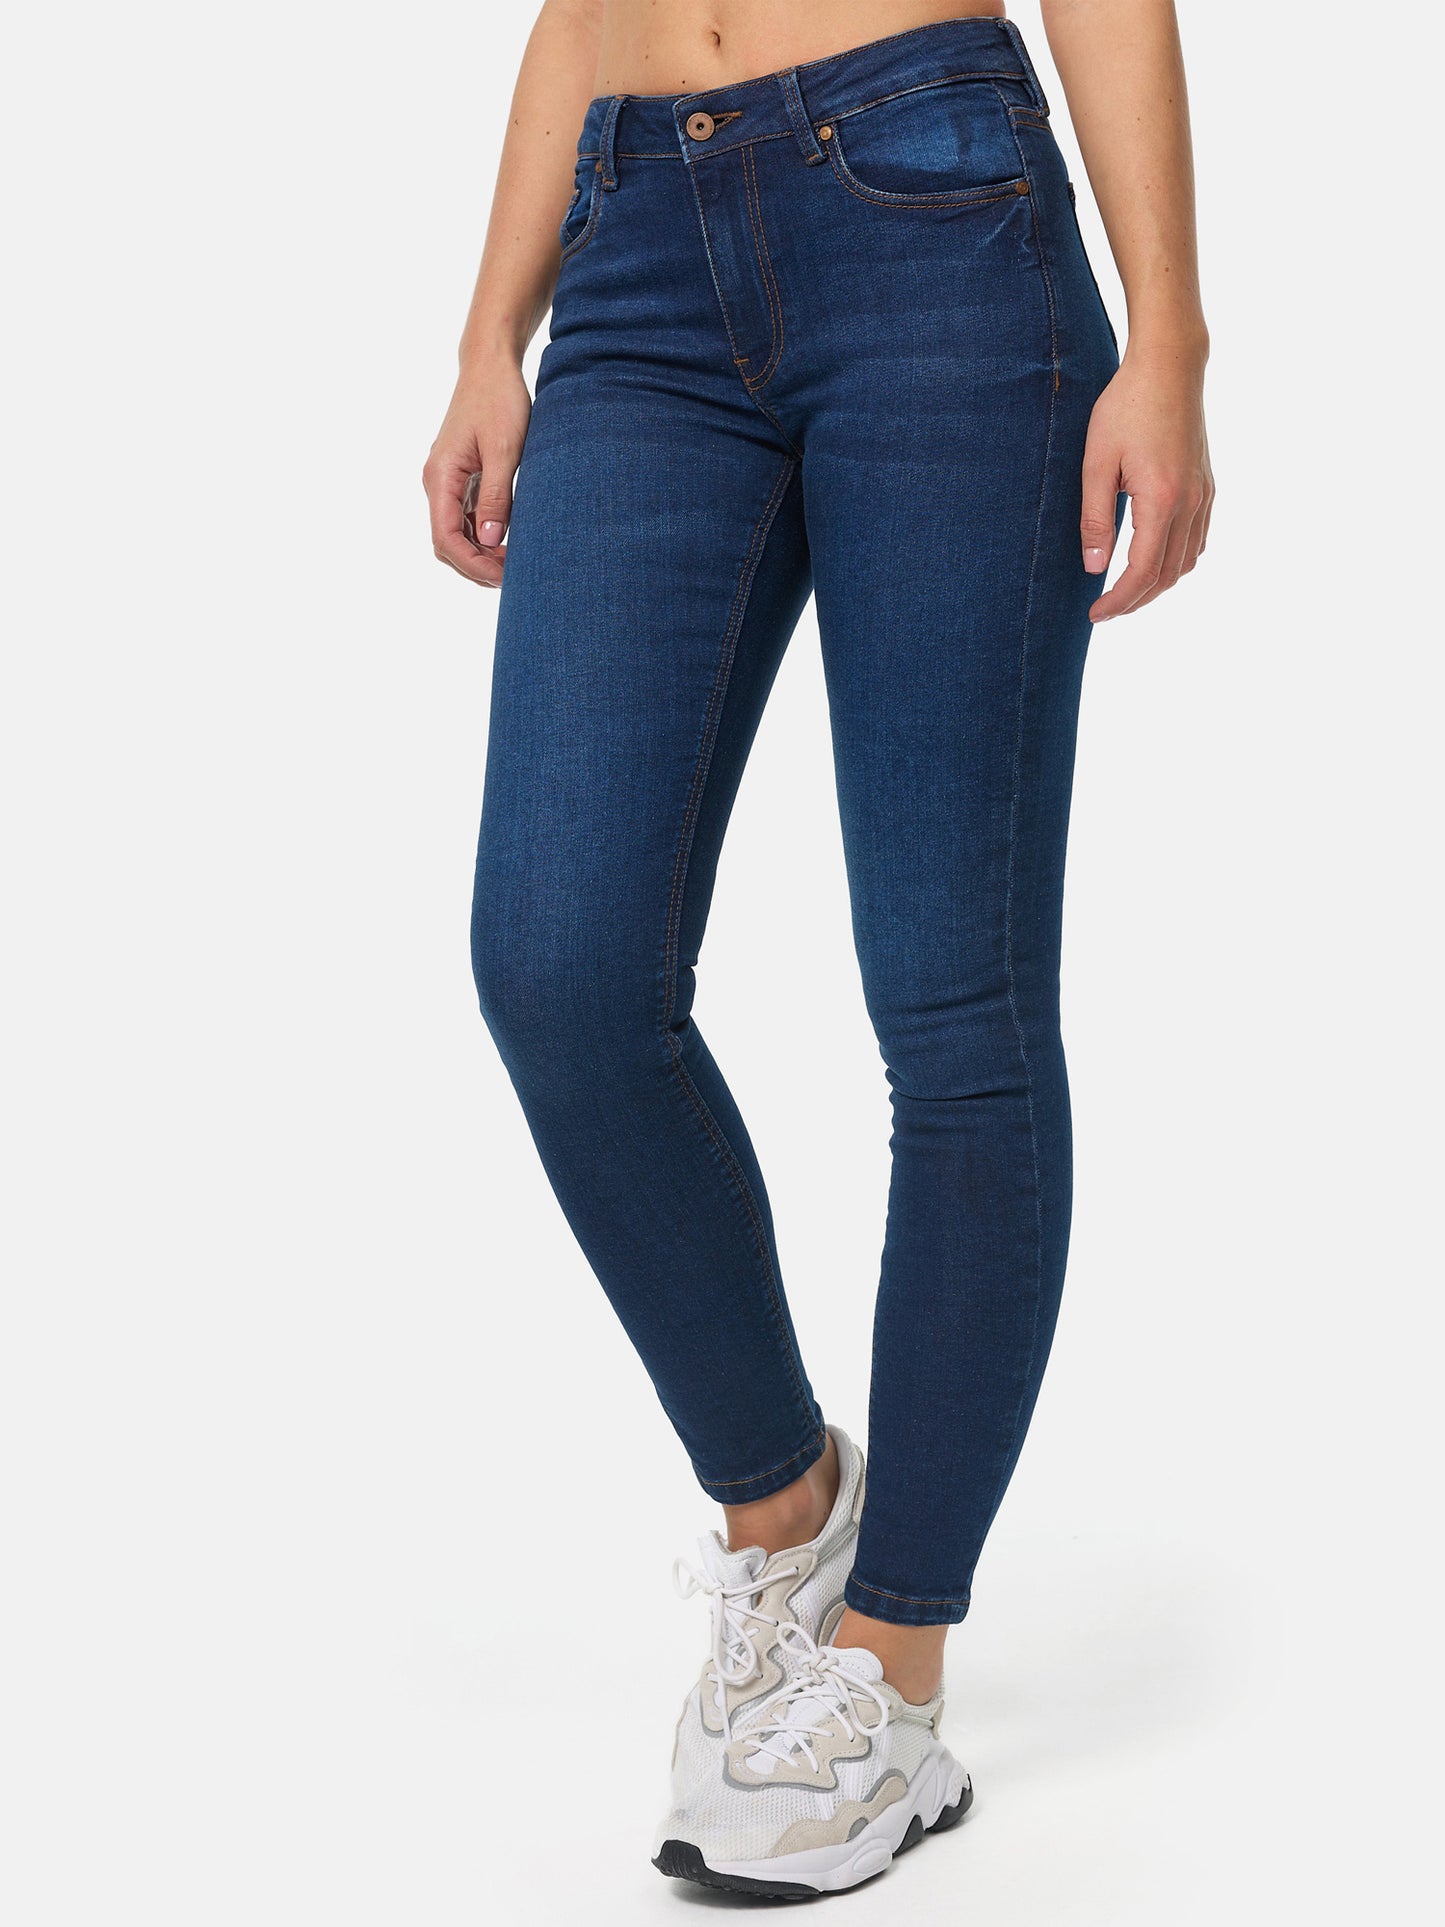 Tazzio Damen Skinny Fit Jeans F114